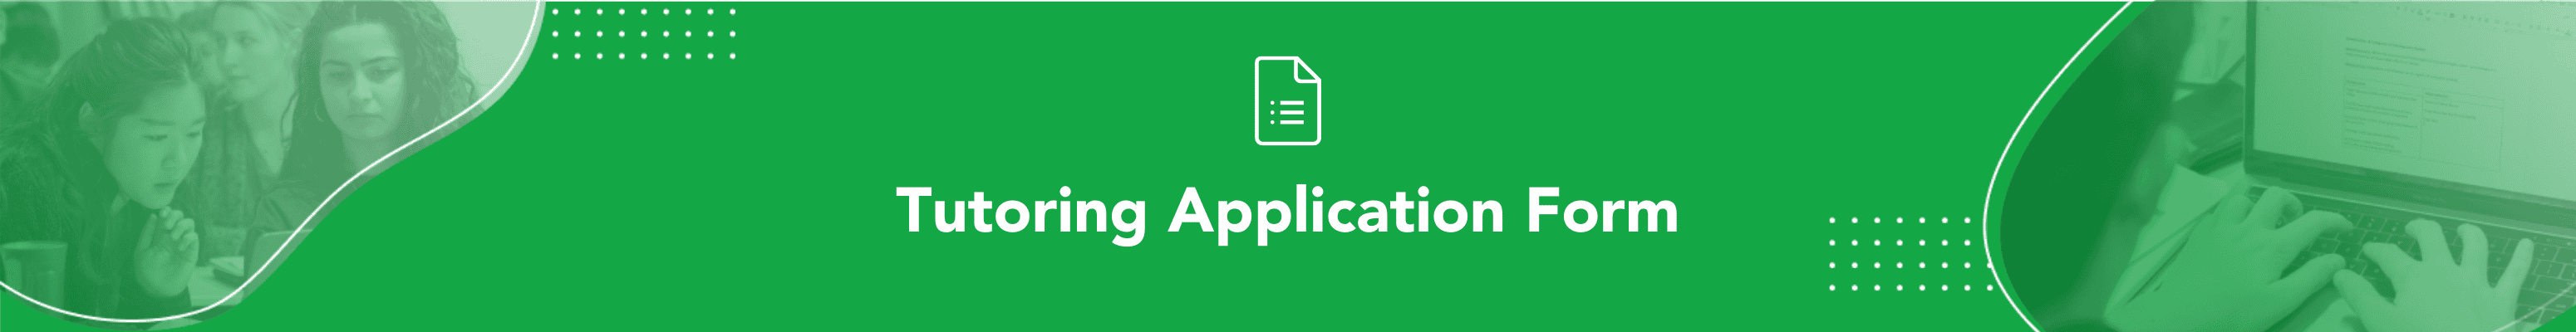 Tutoring Application Form Banner